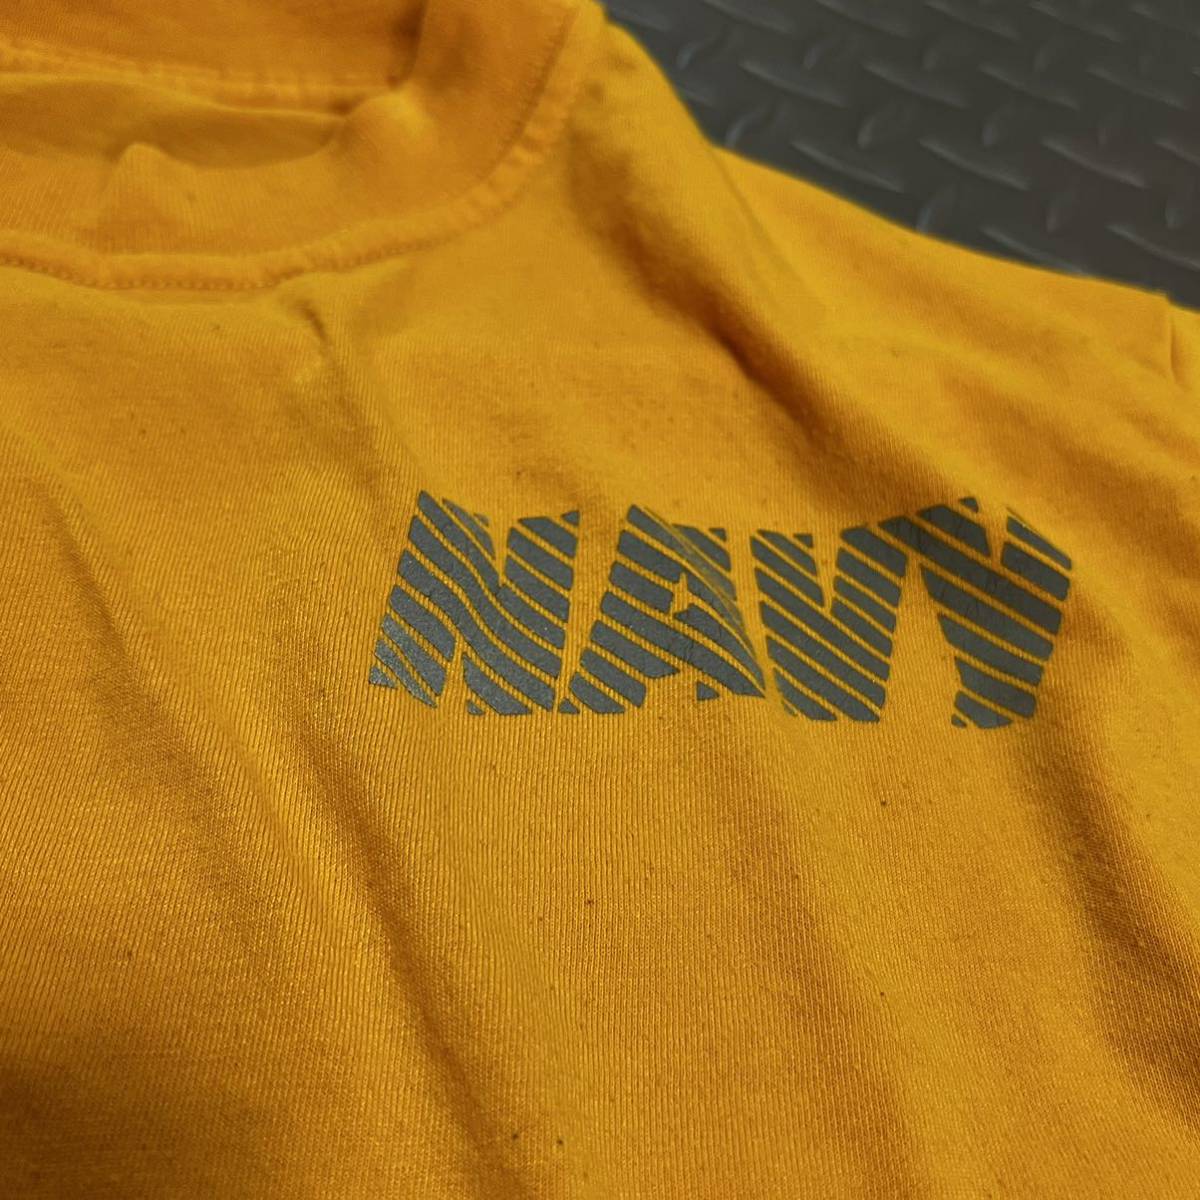 US 米軍放出品 沖縄 Tシャツ NAVY イエロー ランニング スポーツ MEDIUM (INV B#04)の画像2